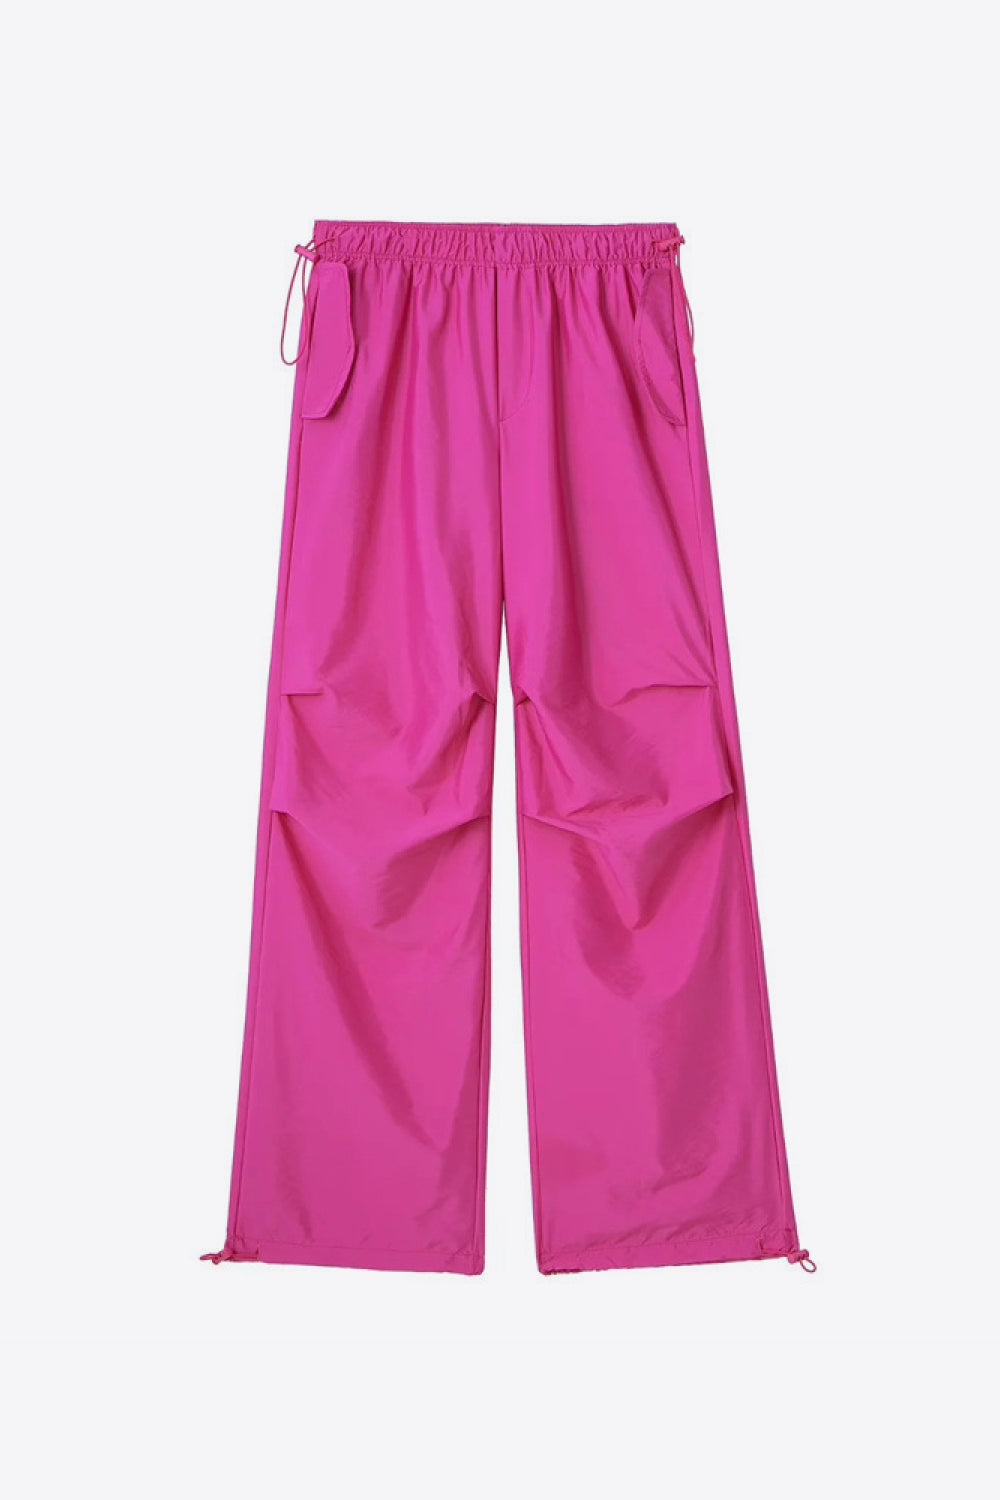 Drawstring Waist Pants with Pockets - Pink / XS - Bottoms - Pants - 18 - 2024